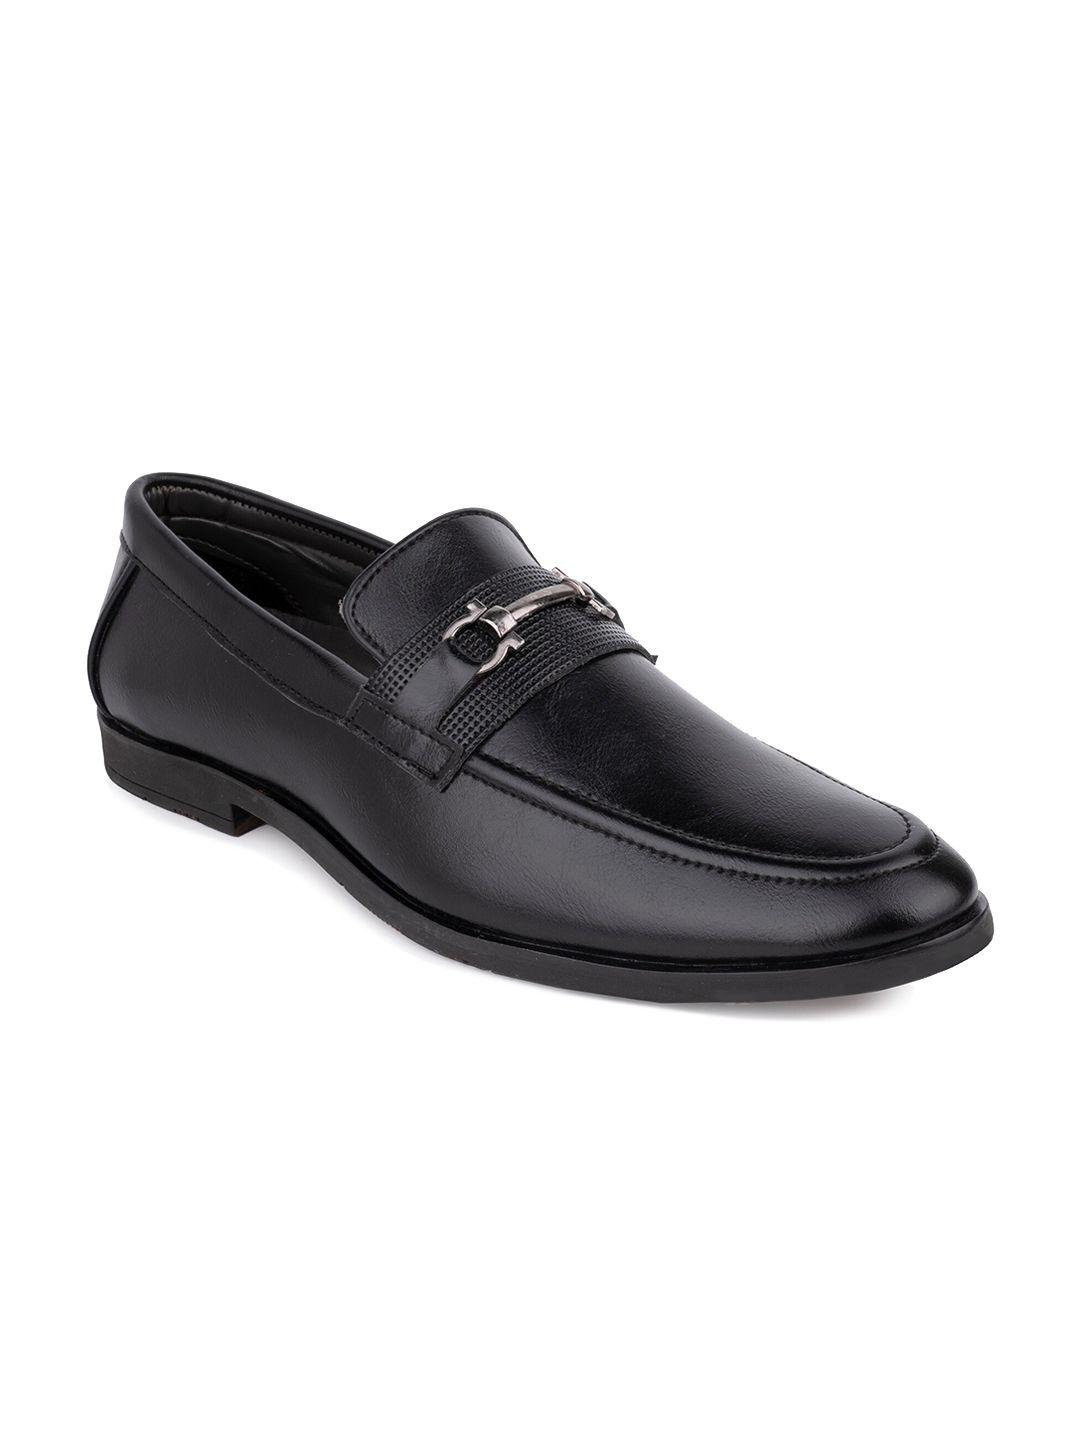 birgos men leather formal loafers